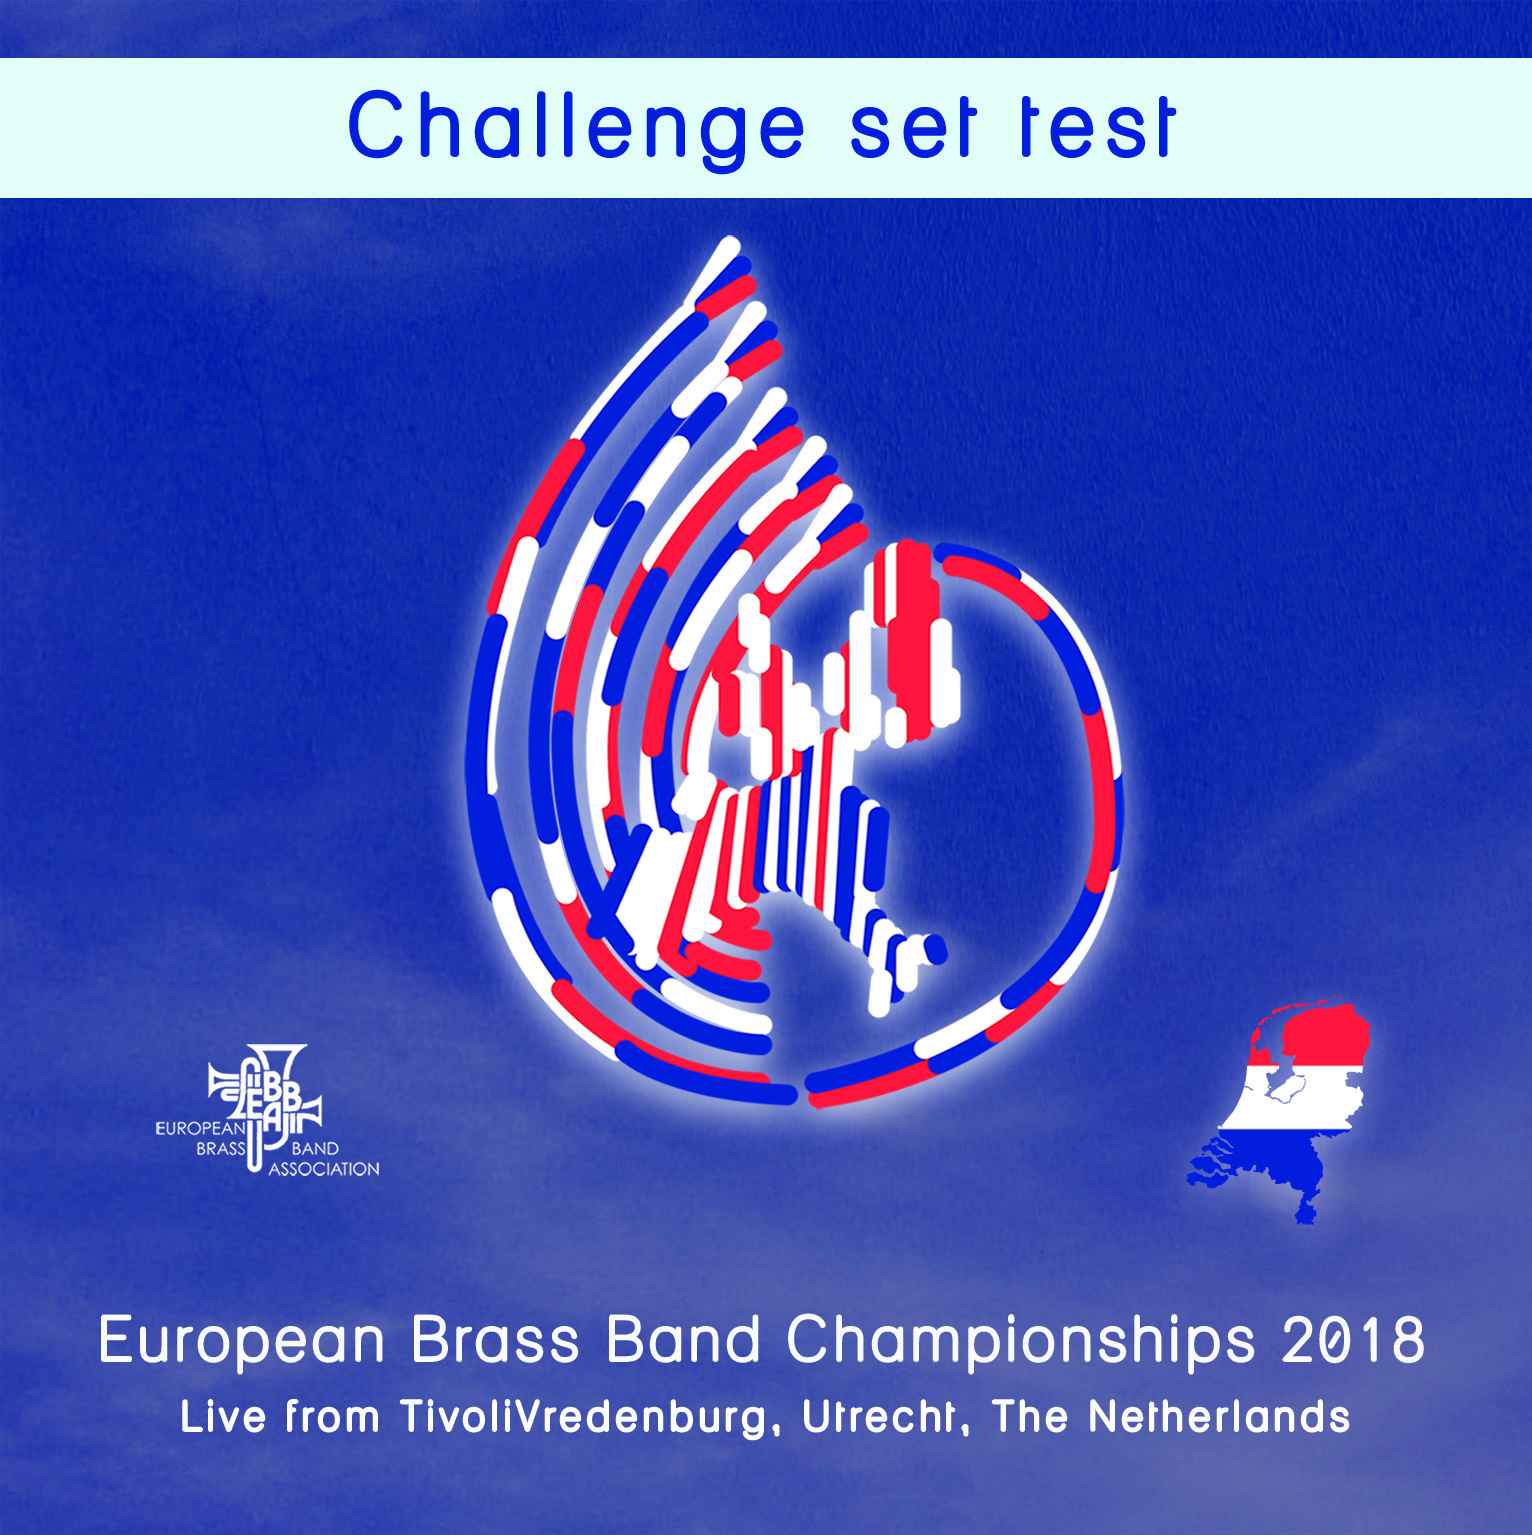 European Brass Band Championships 2018 - Challenge Section Set Test - Download